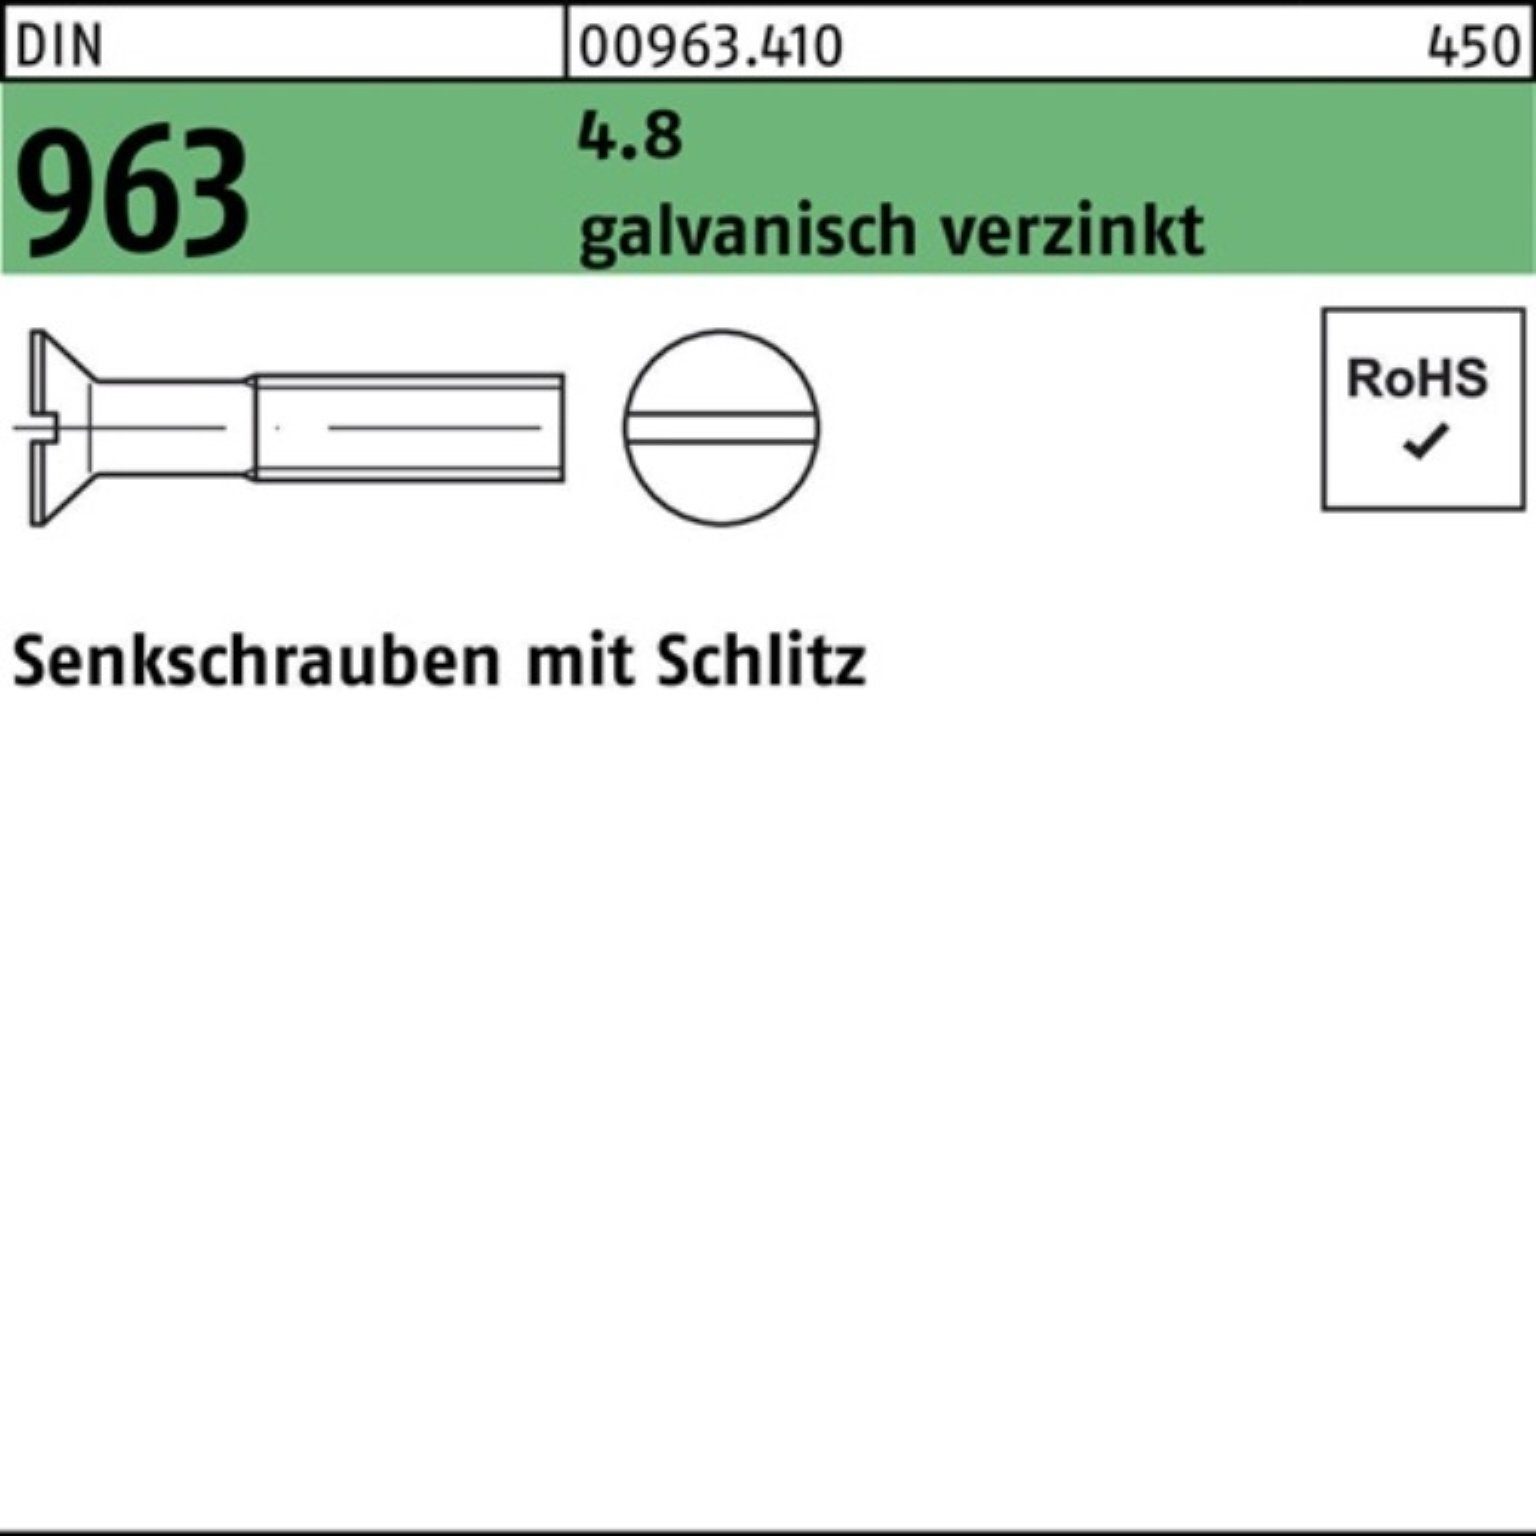 100er Reyher Stü Senkschraube 90 Schlitz galv.verz. DIN 4.8 963 100 Senkschraube Pack M8x